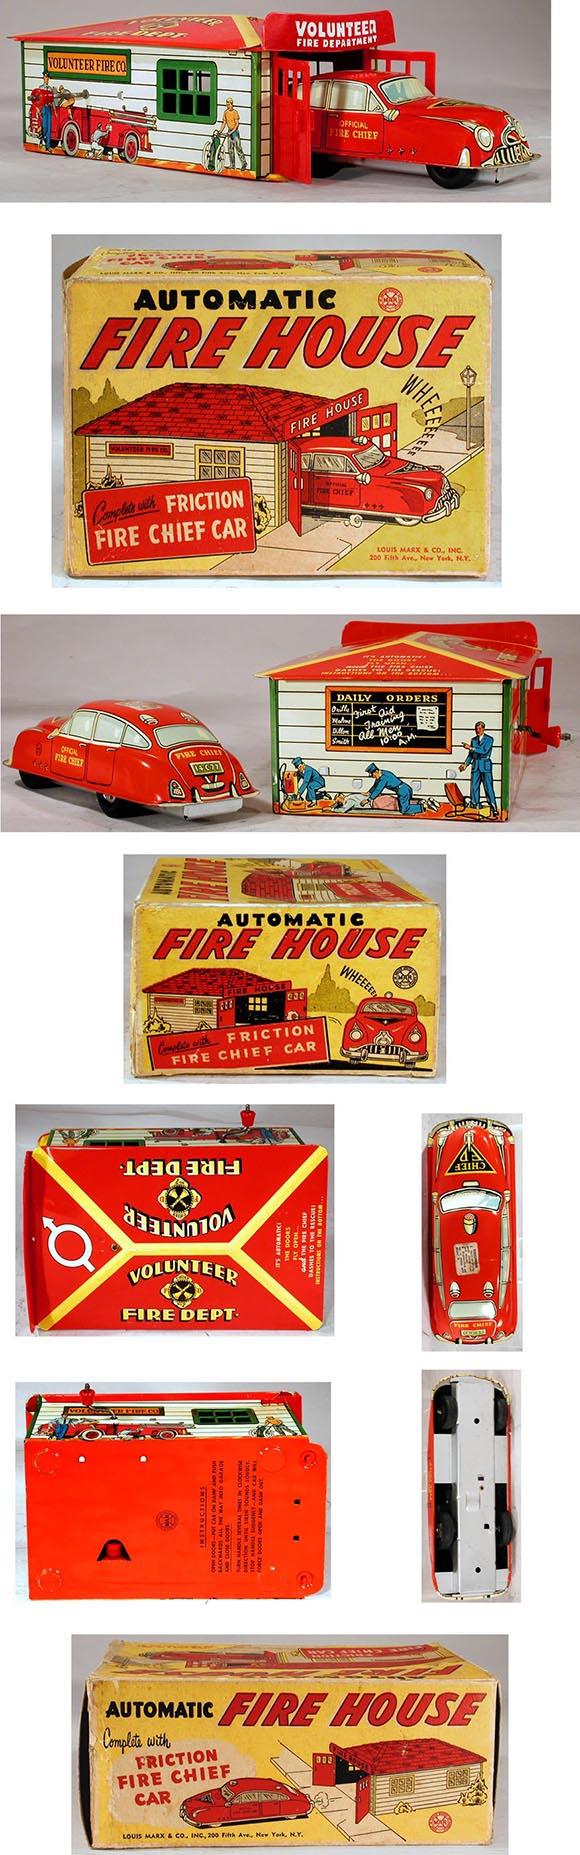 c.1949 Marx, Automatic Fire House in Original Box (#2)